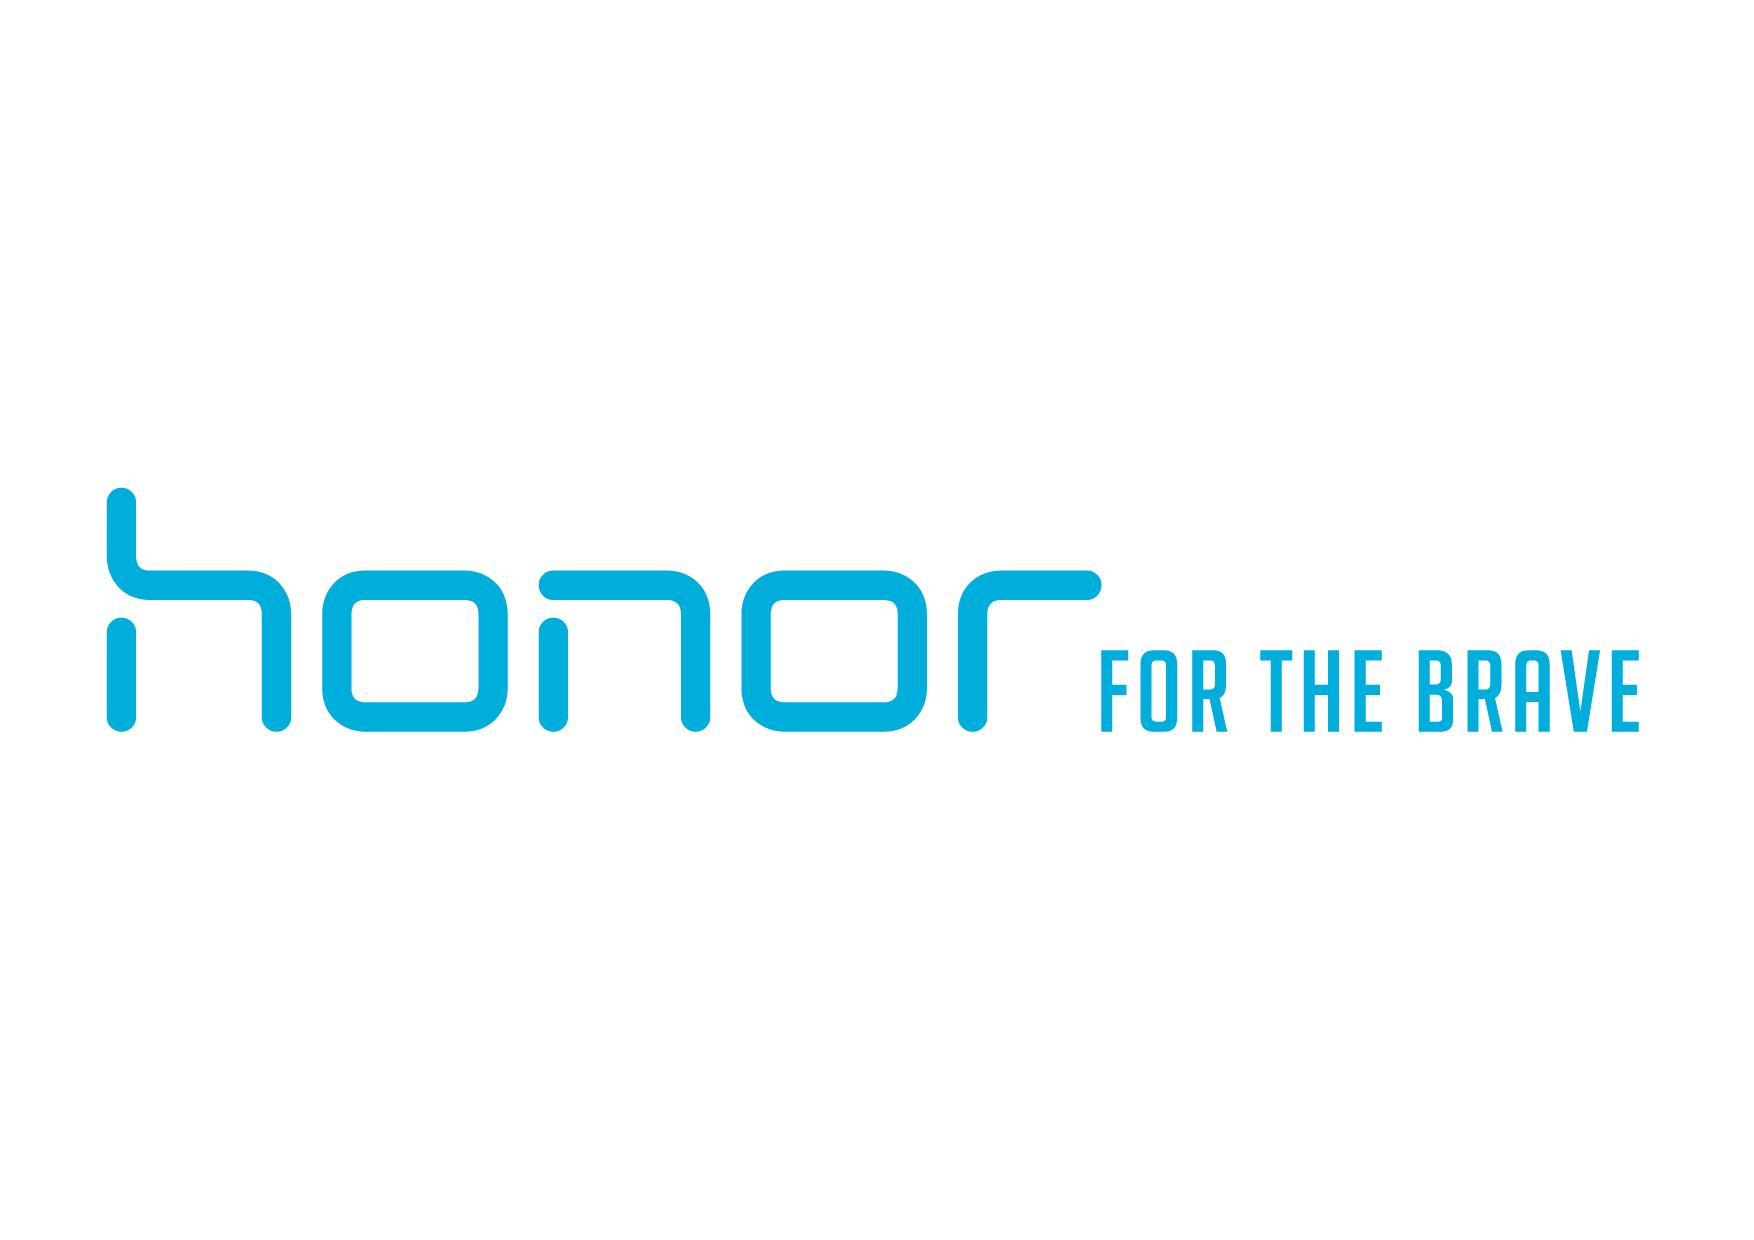 Honor plans to sell smartphones through offline medium